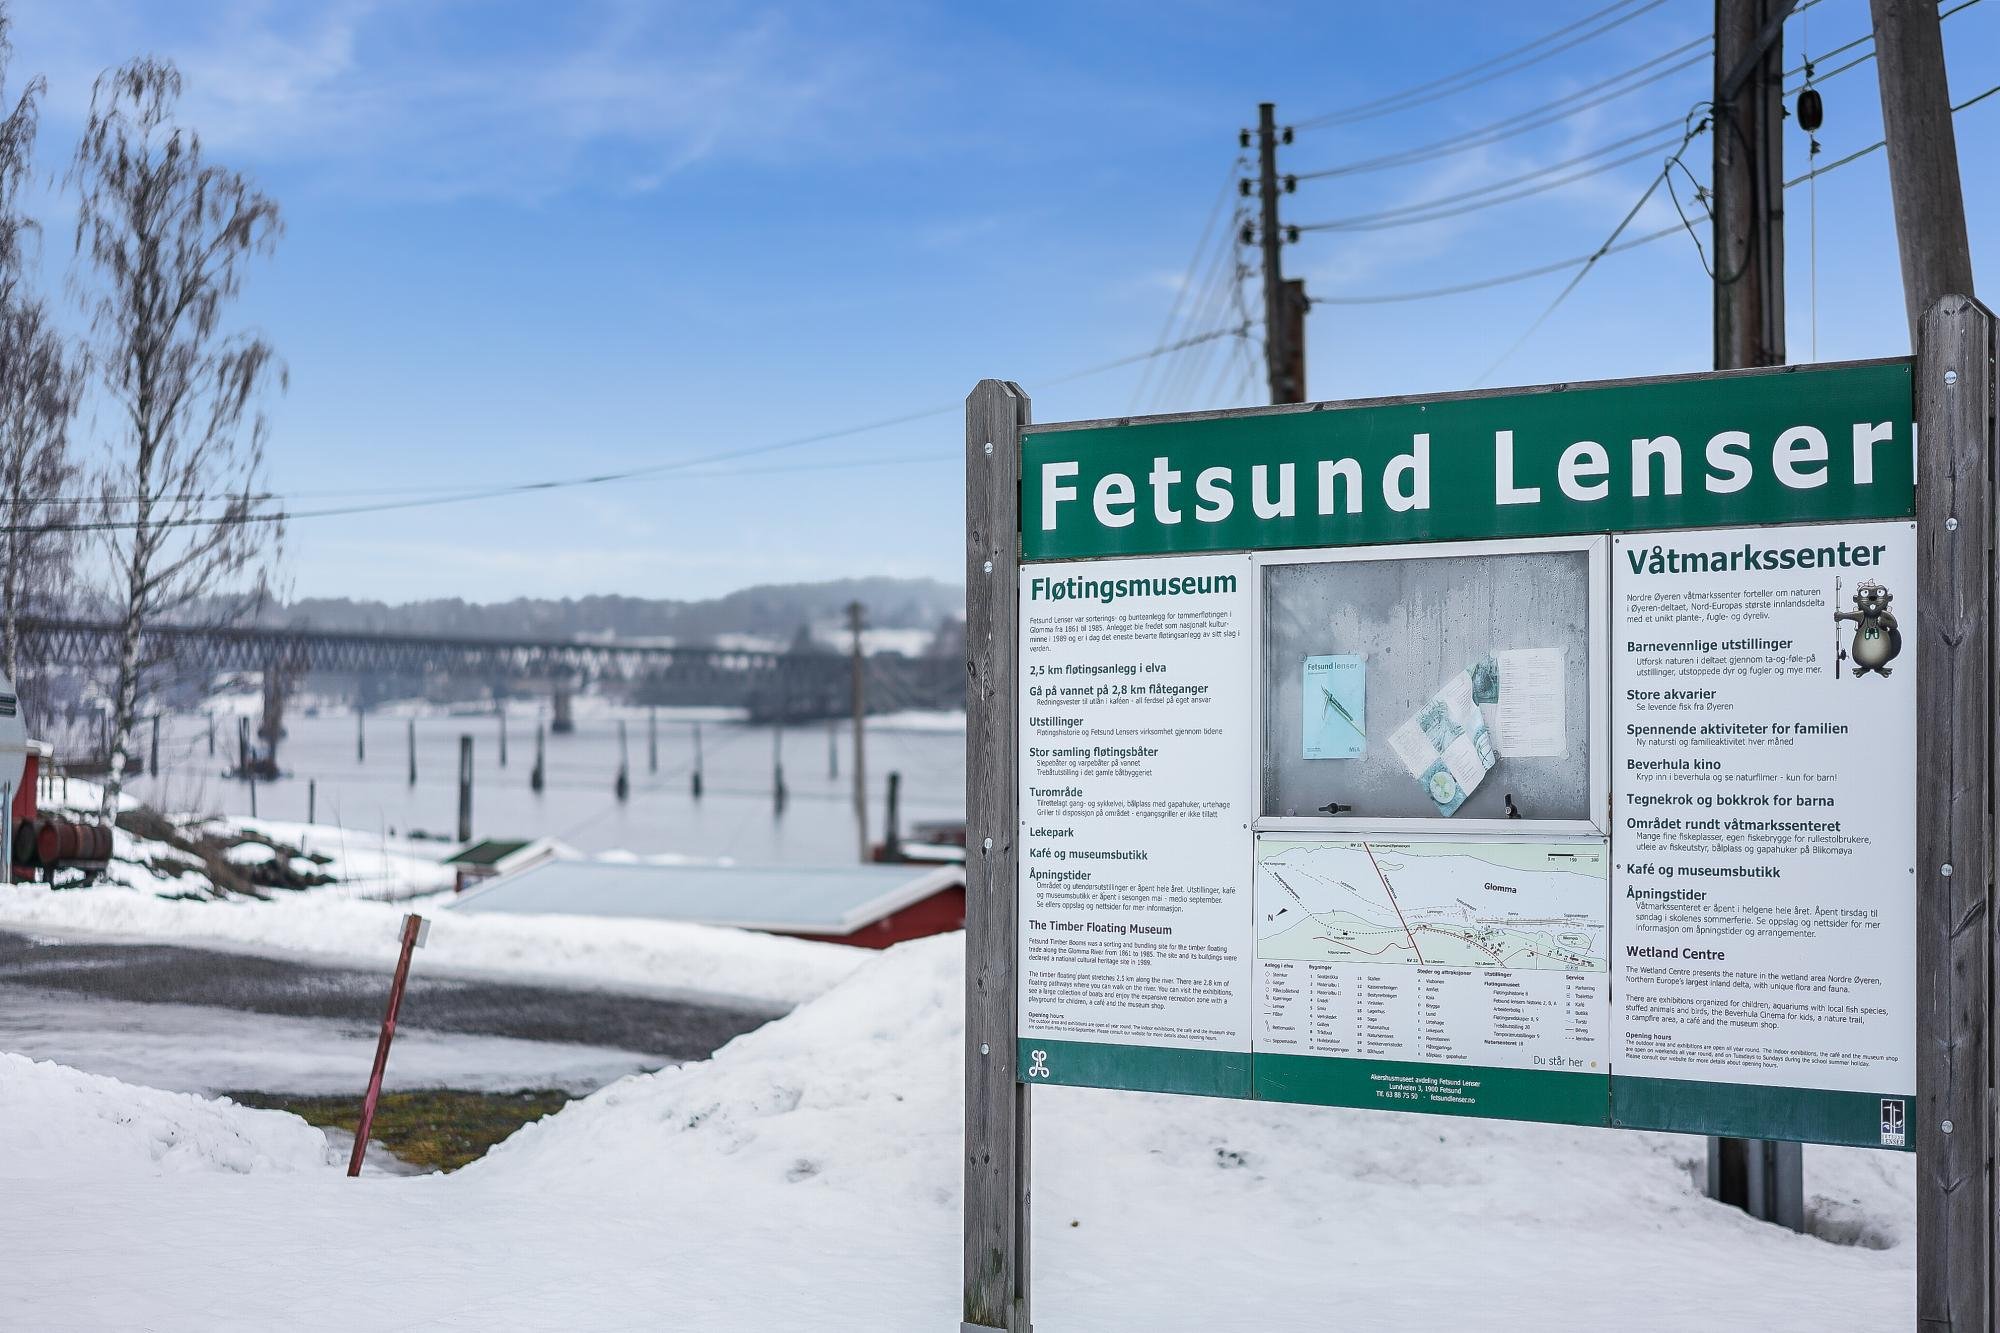  Fetsund Lenser er et populært området midt i et naturreservat. 